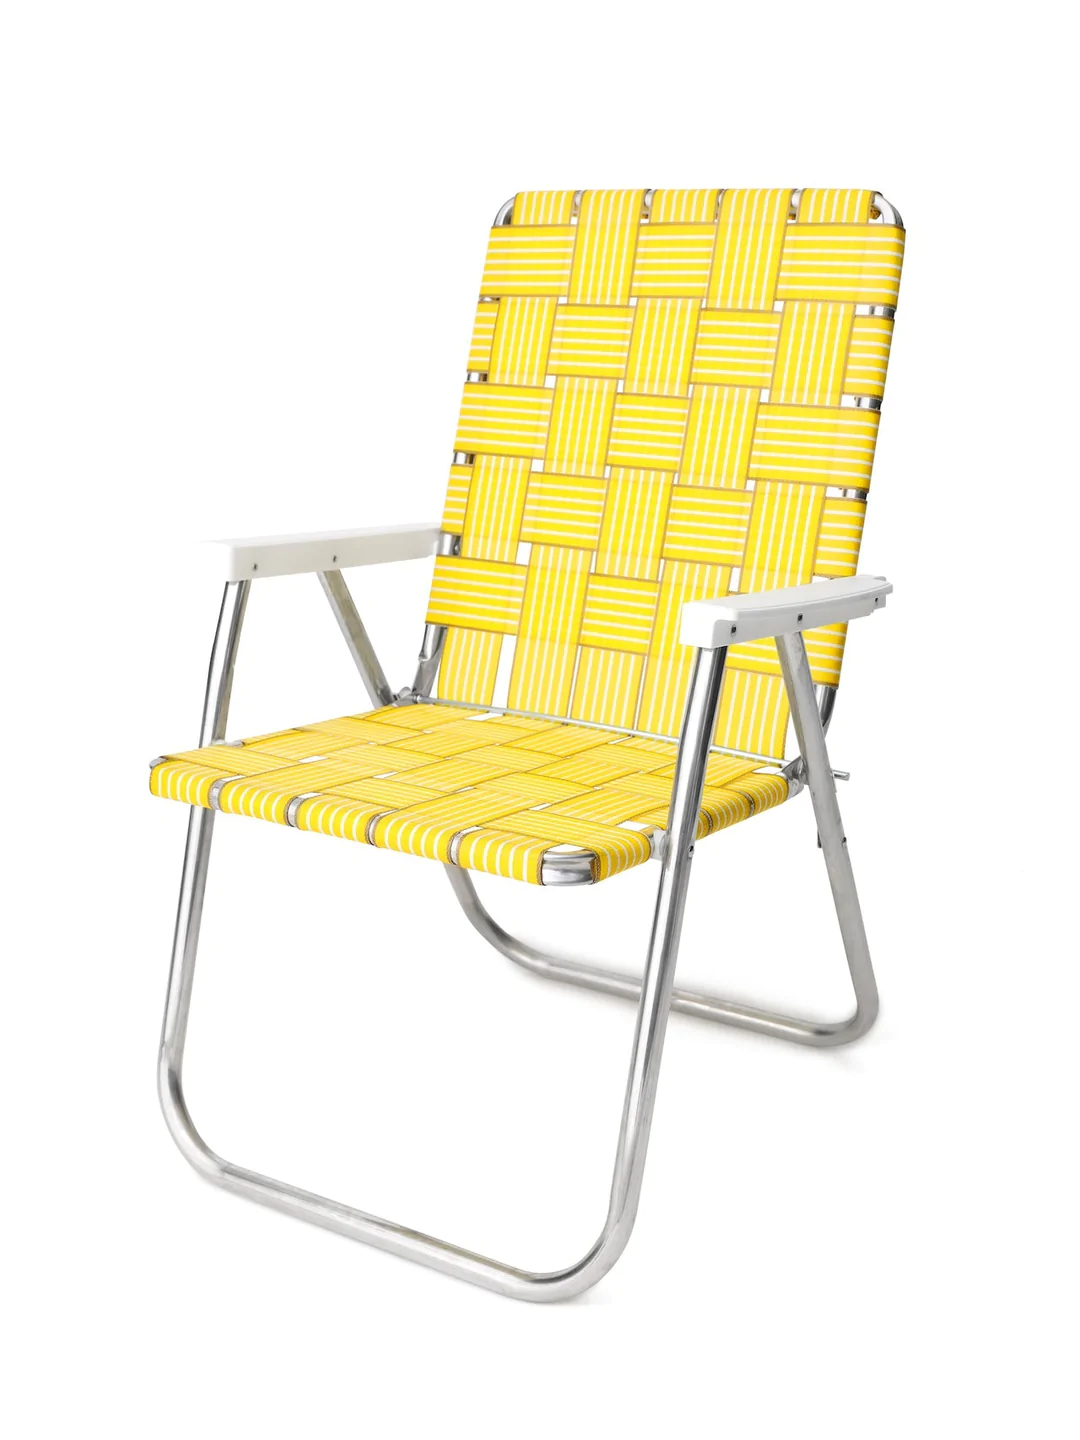 Classic Chair Yellow